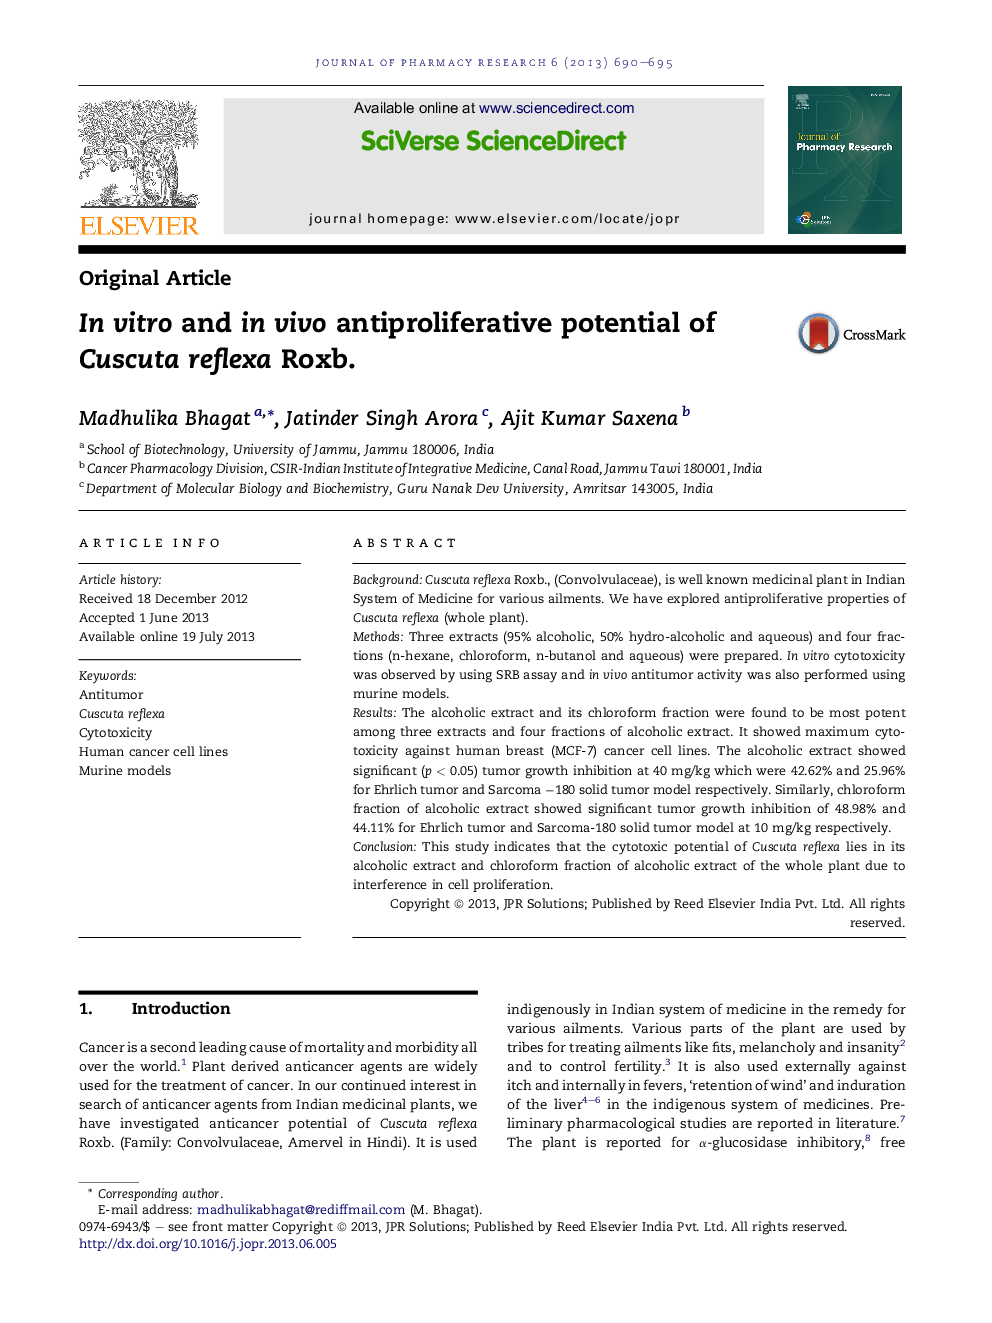 InÂ vitro and inÂ vivo antiproliferative potential of Cuscuta reflexa Roxb.